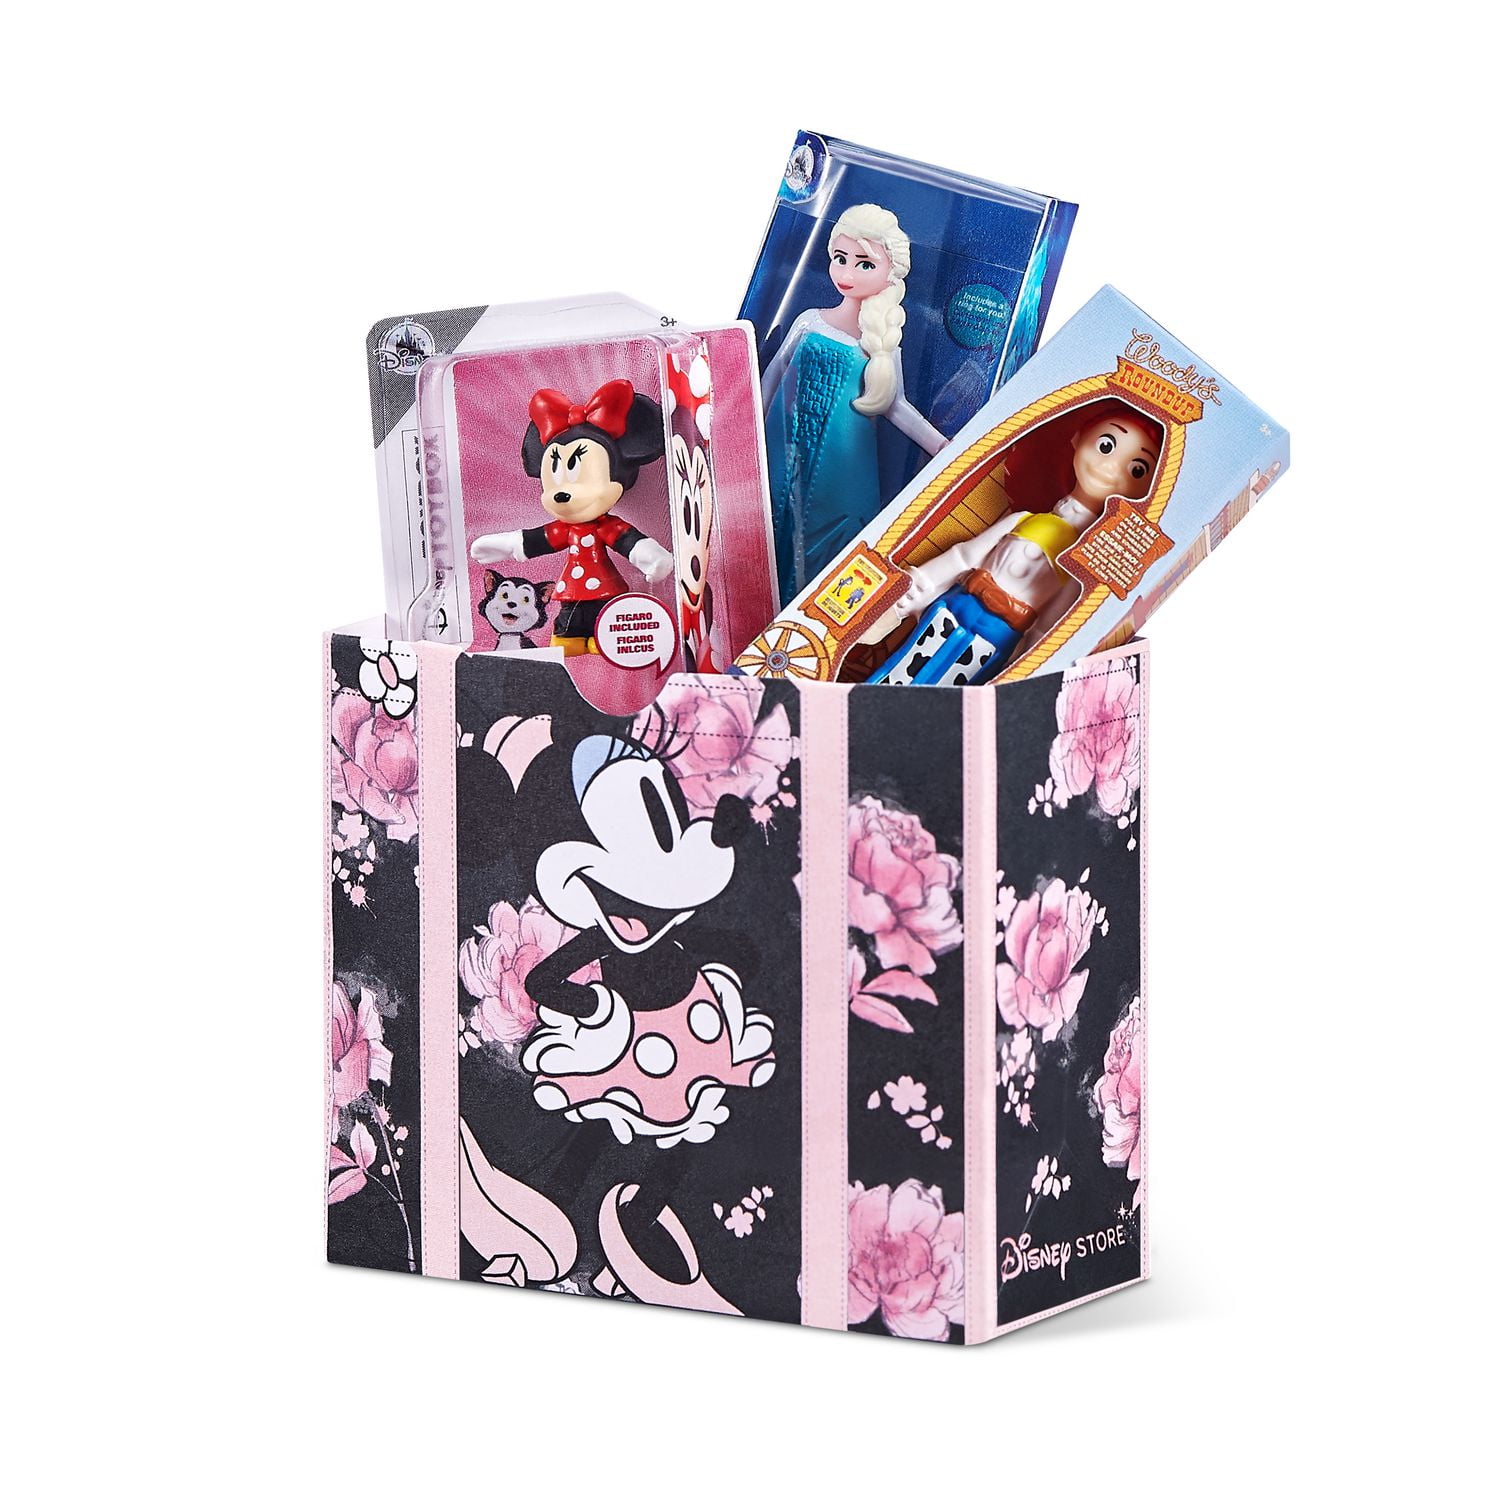 5 Surprise Mini Brands Disney Store Exclusive Series 1 Capsule Collectibles  (3 Capsules)